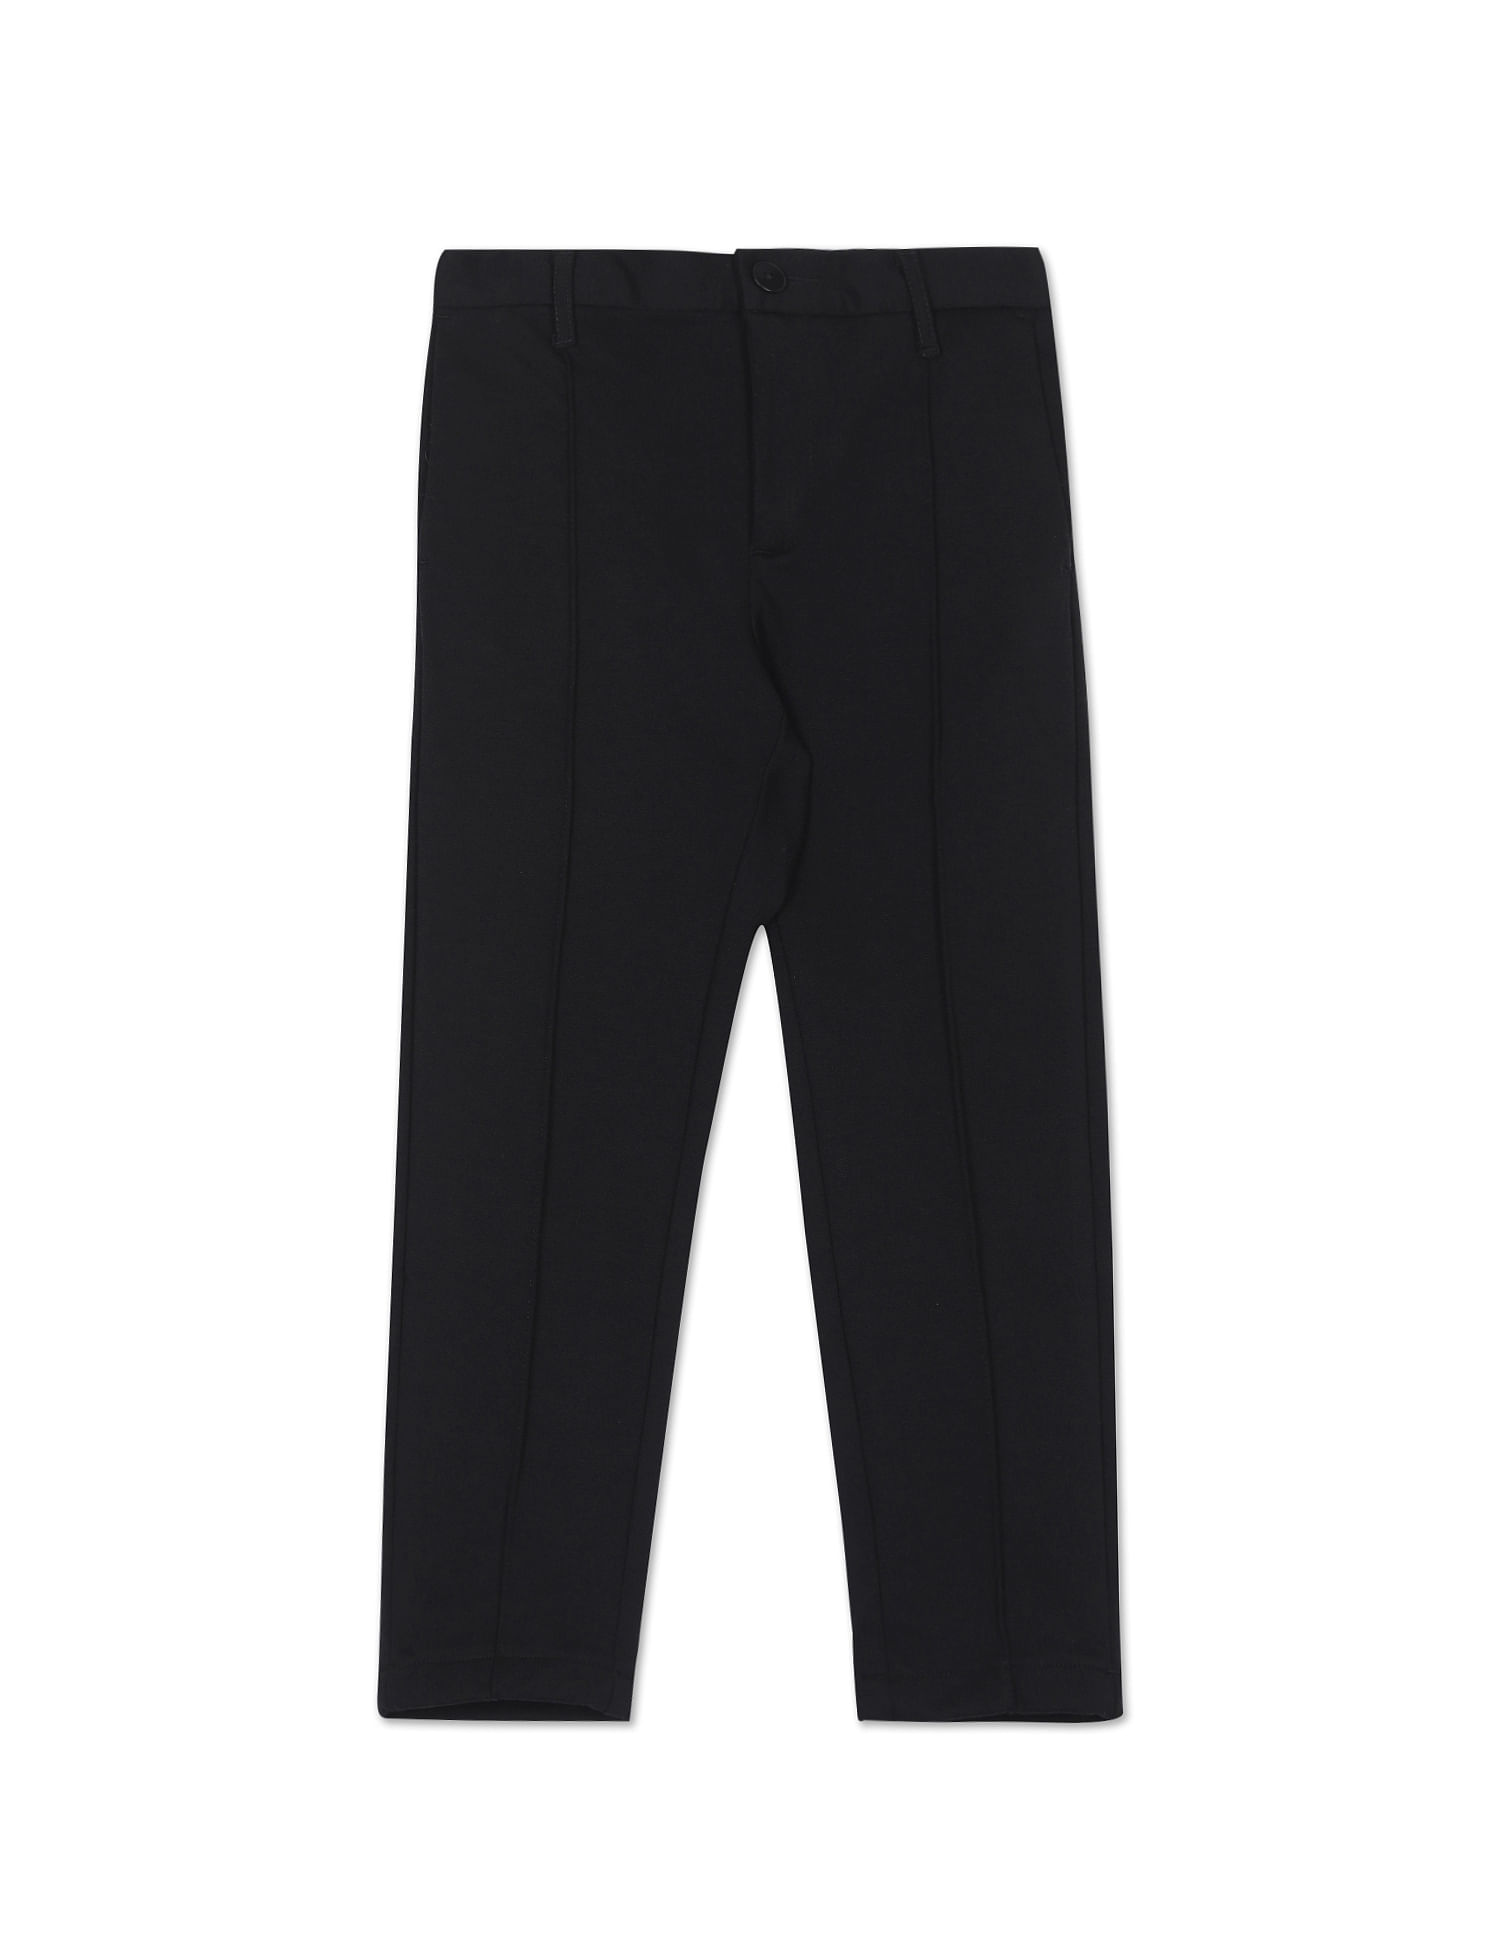 Boys Black Trousers Kids Zip & Clip with Half Elastic Waist School Uniform  Pants | eBay